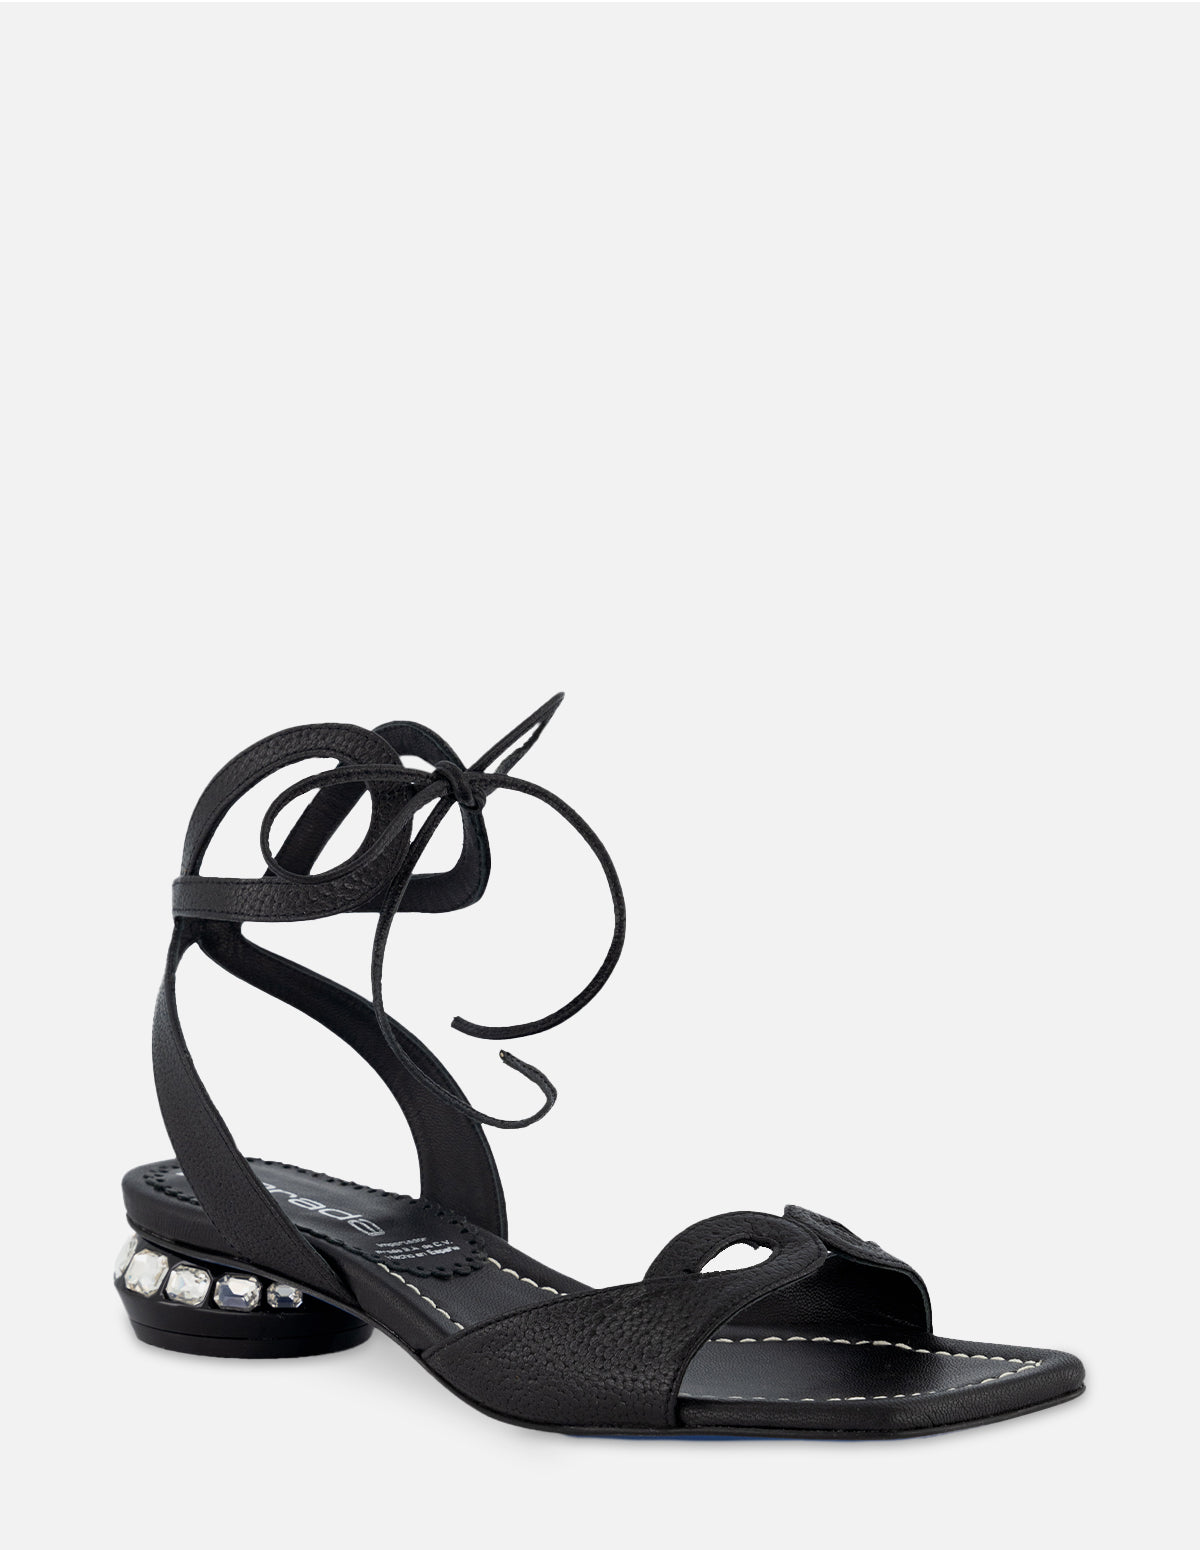 Sandalia de piso en piel bombeada color negro con tacón de pedrería para mujer